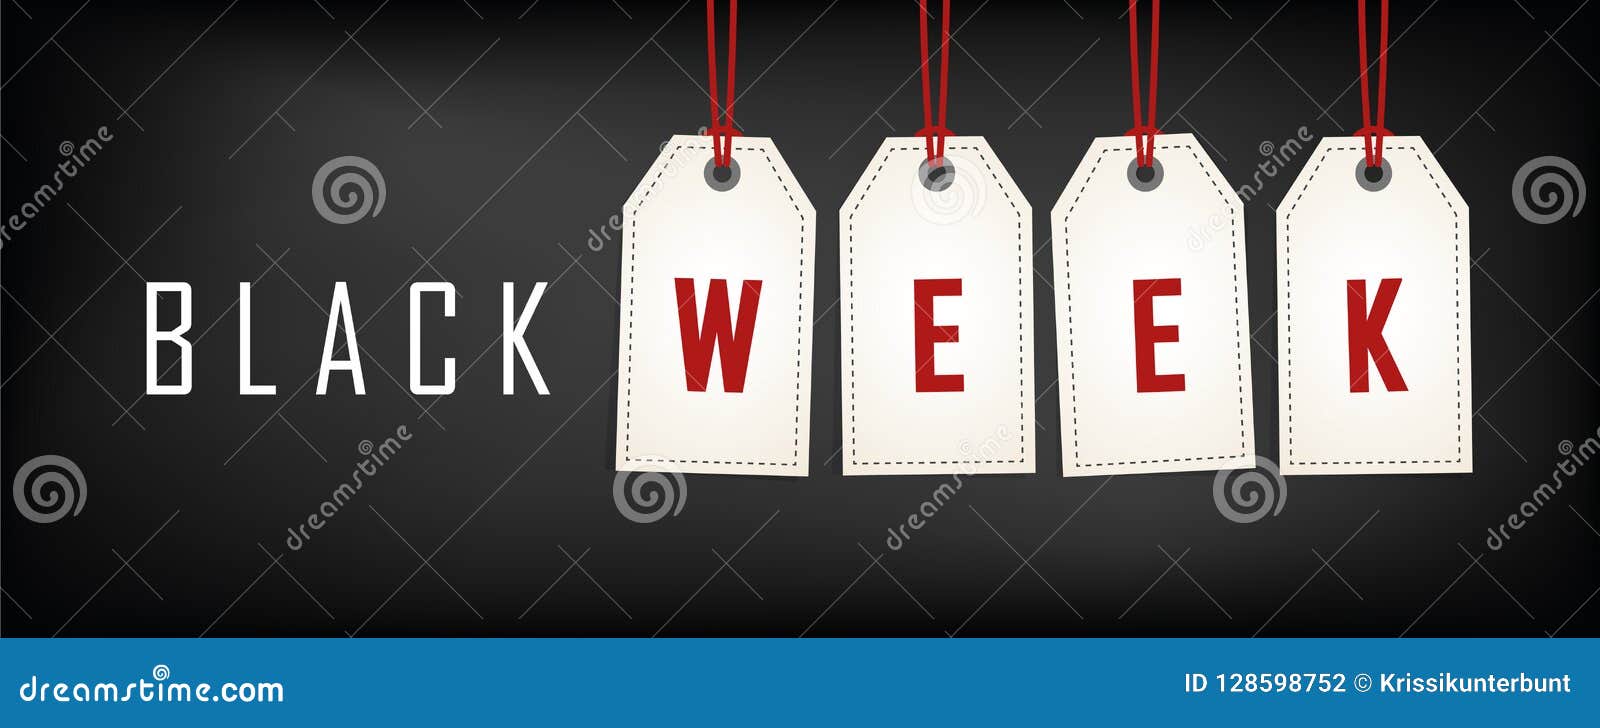 black week sale white tags advertising on black background